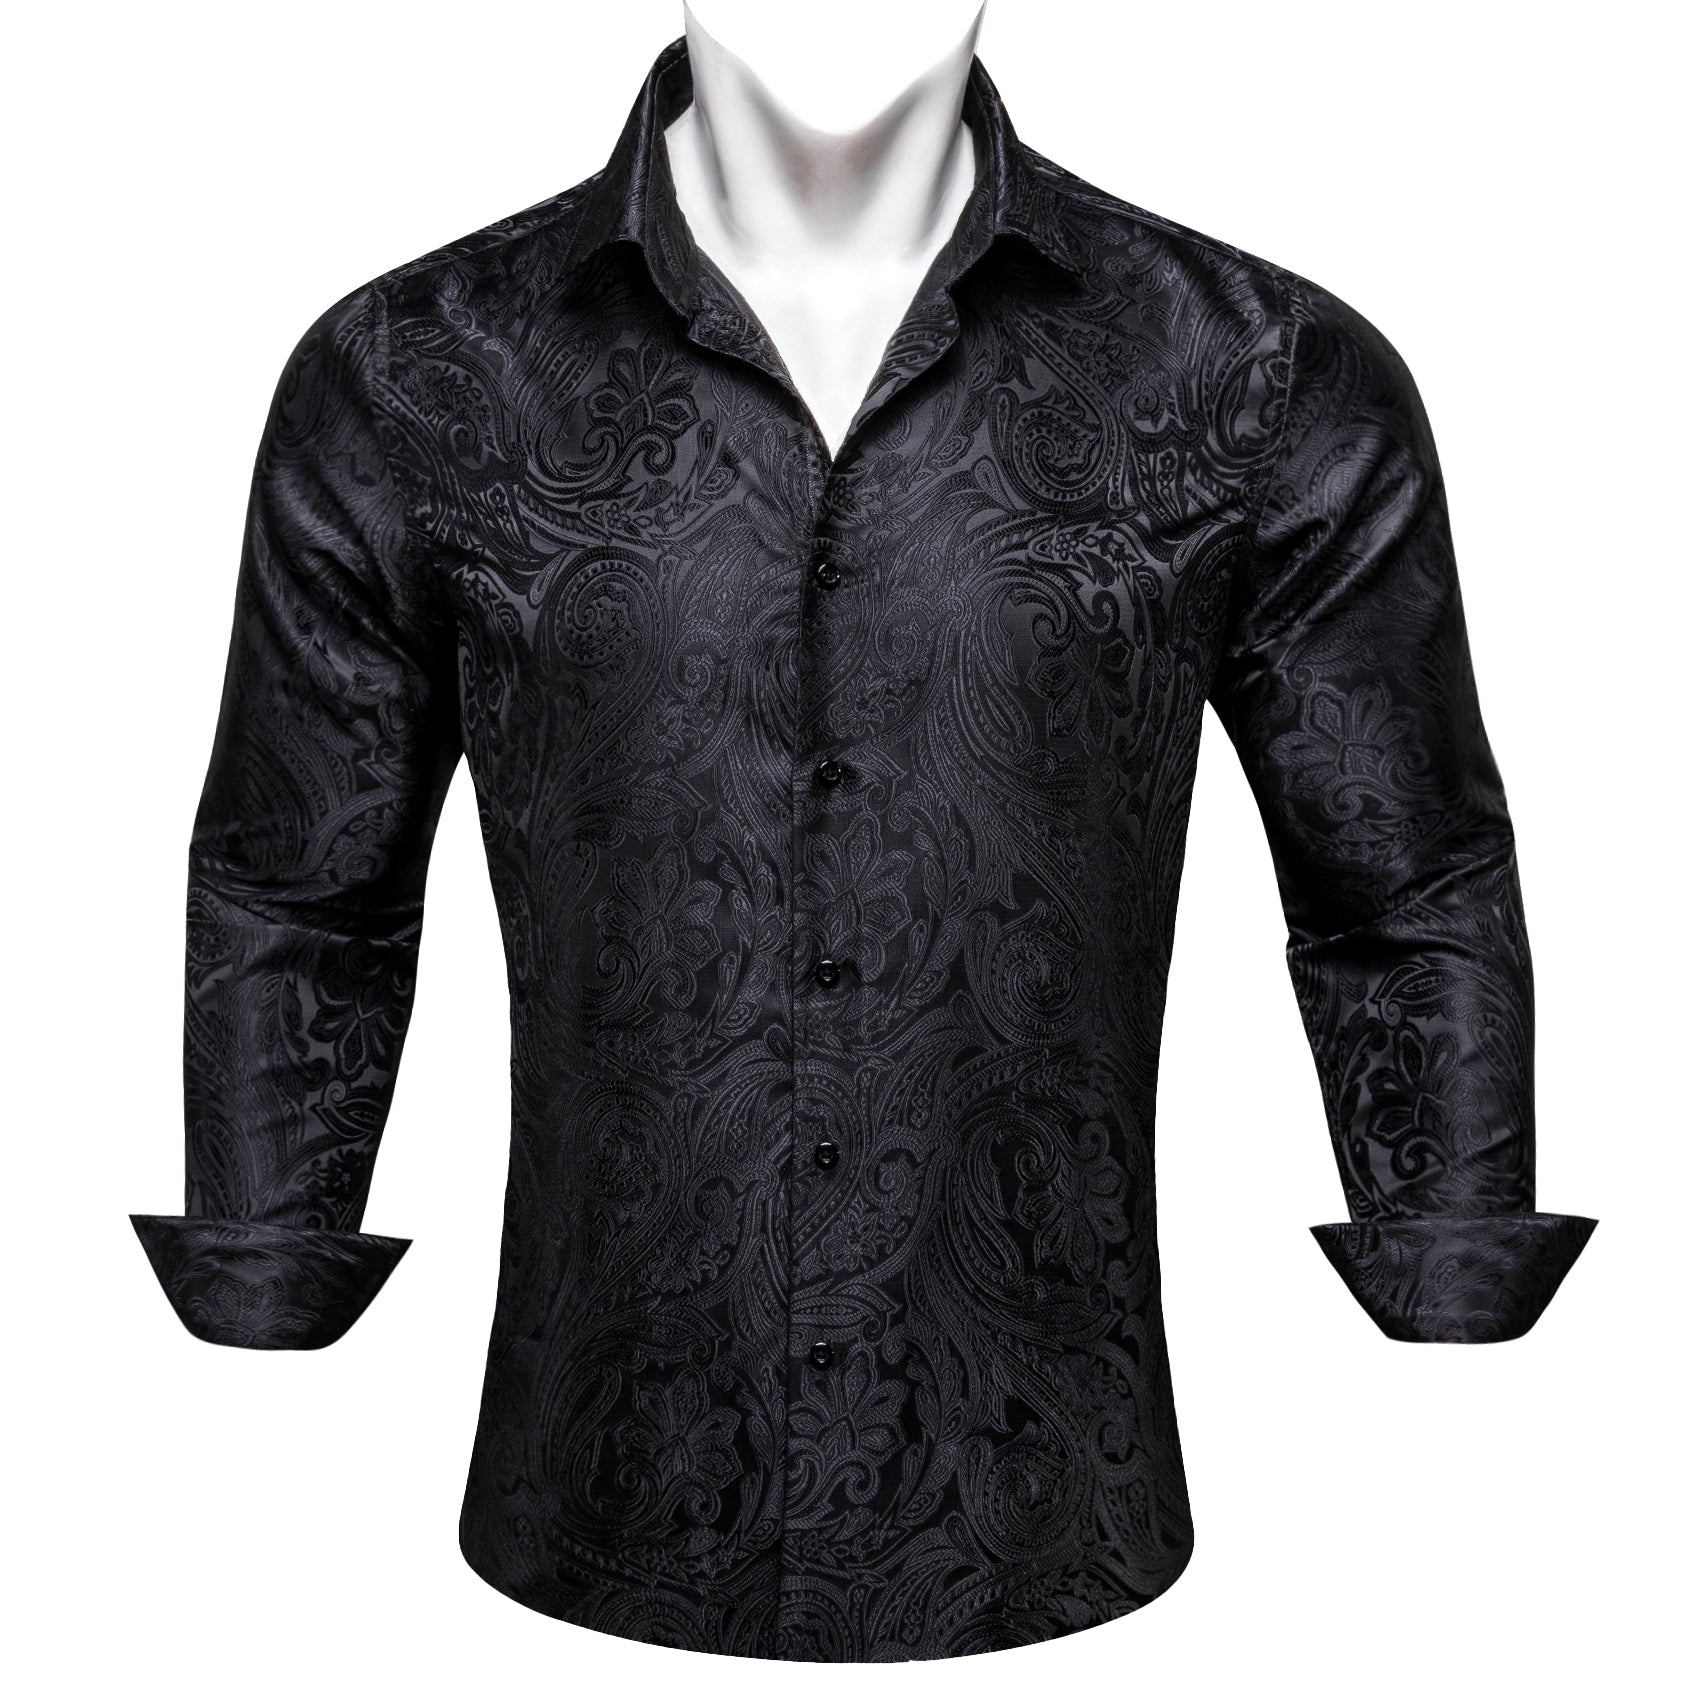 Barry.wang Black Paisley Men's Silk Shirt